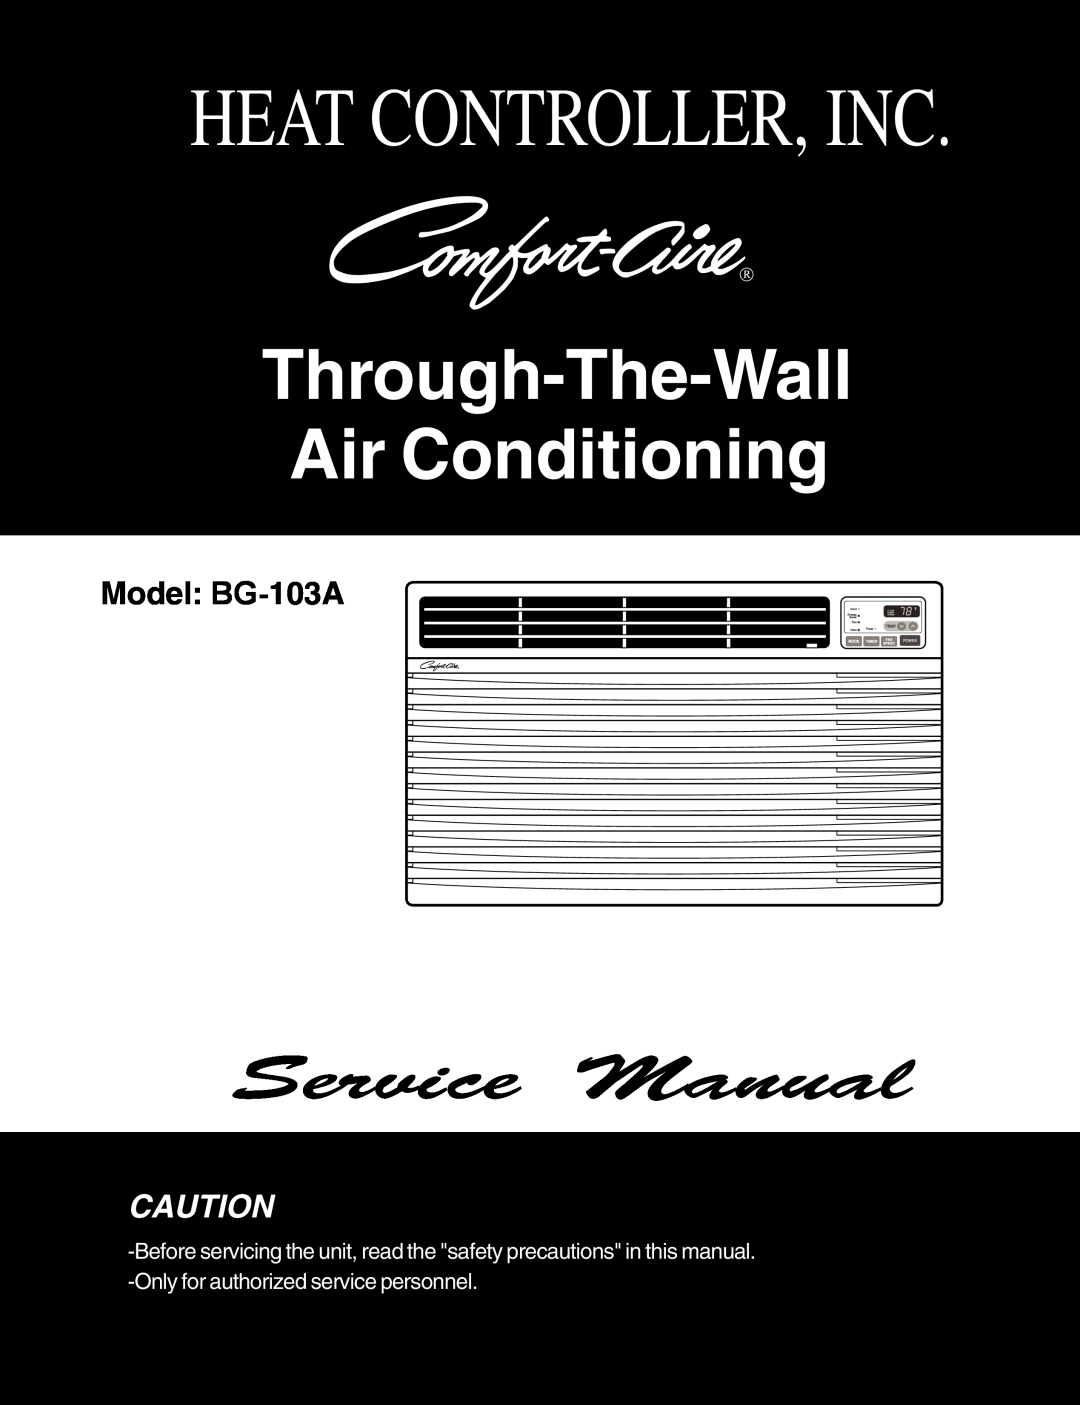 Heat Controller service manual Heat Controller, Inc, Through-The-Wall Air Conditioning, Model BG-103A 